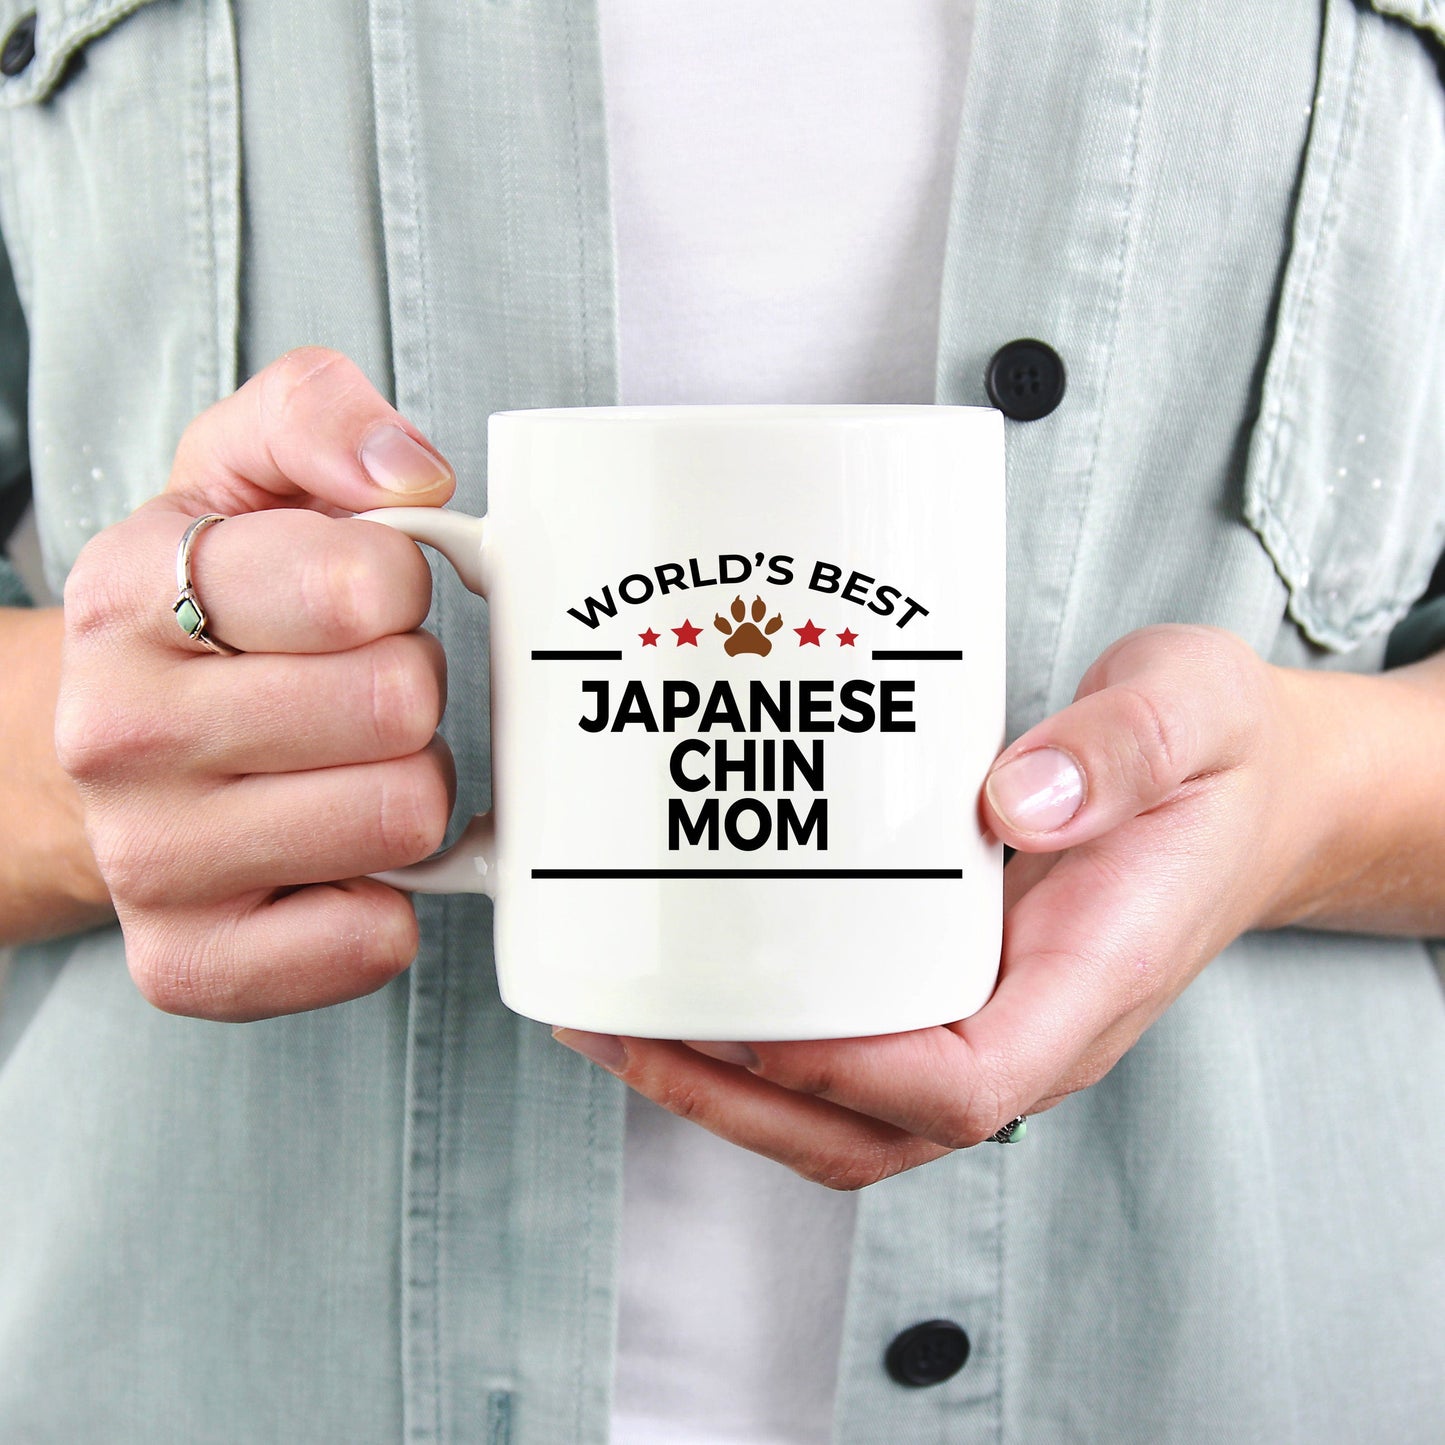 Japanese Chin Dog Lover Gift World's Best Mom Birthday Mother's Day White Ceramic Coffee Mug